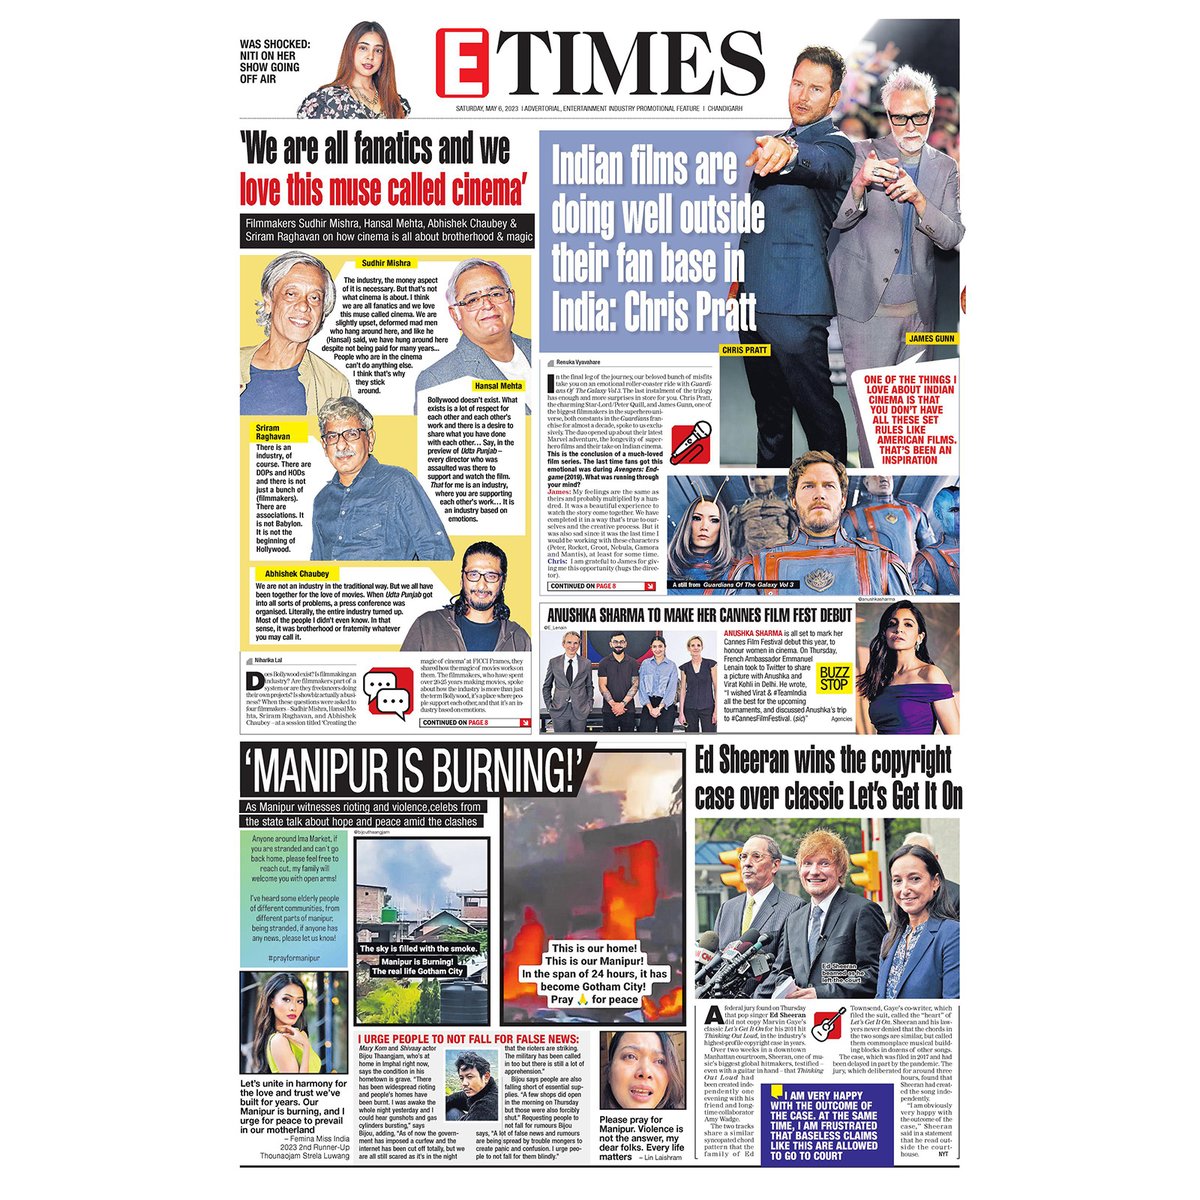 Are you missing #ETimes print edition? Log on to epaper.timesofindia.com to read...
#Nititaylor #sudhirmishra #hansalmehta #abhishekchaubey #sriramraghavan #ficci #chrisspratt #jamesgunn #anushkasharma #cannesfilmfestival #viratkohli #manipurisburning #edsheran #letsititon